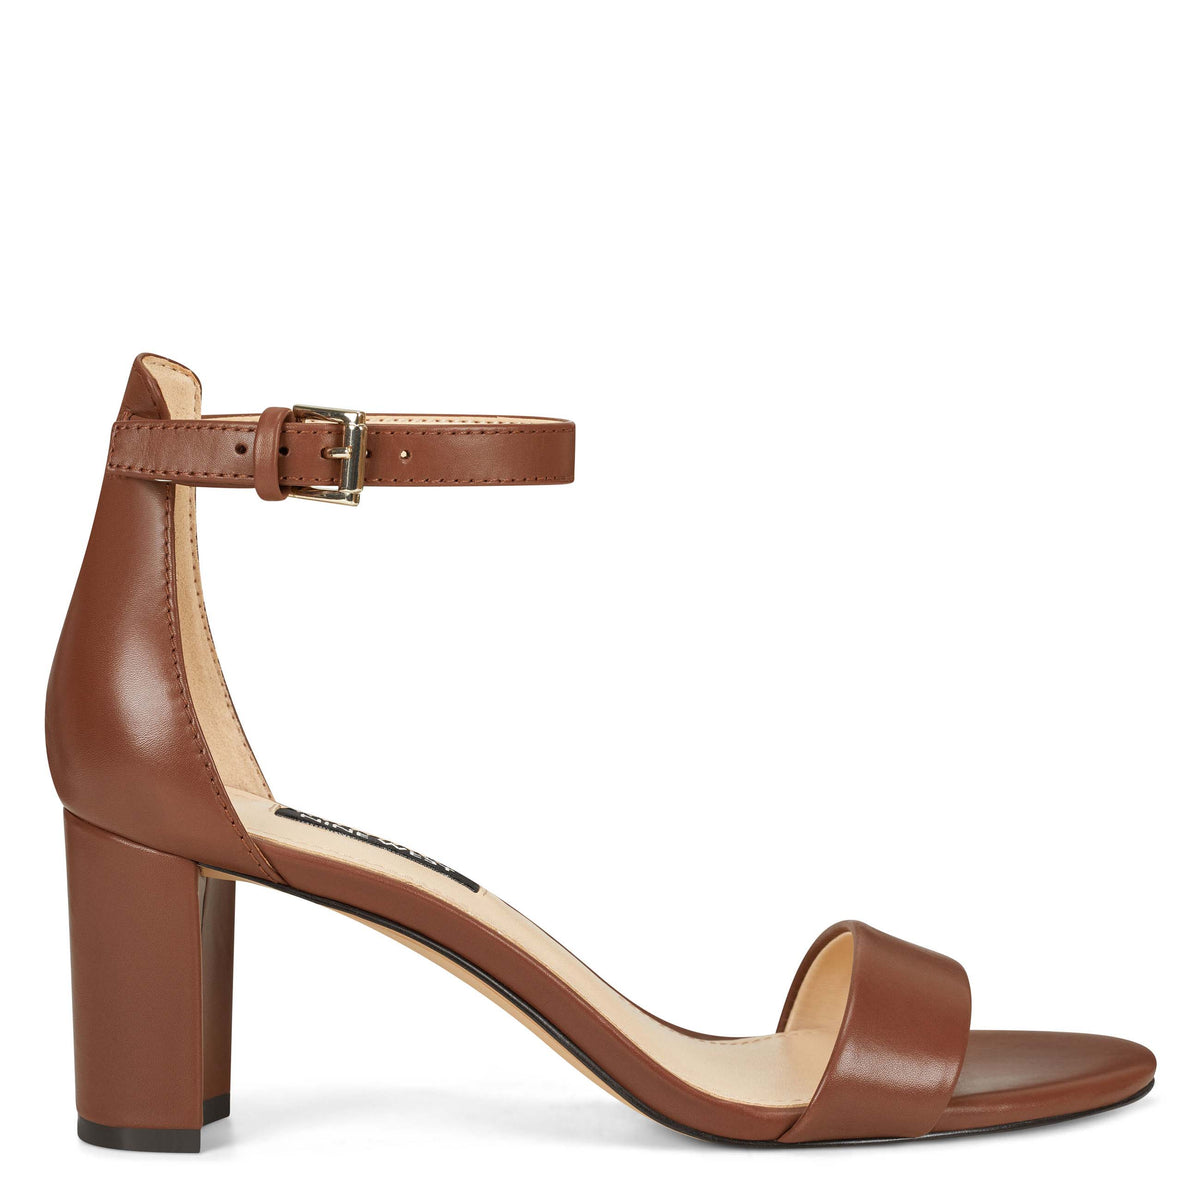 Women's Sandals Size 8.5/41 Euro, Brown 2 Strap Flat Classy Dress